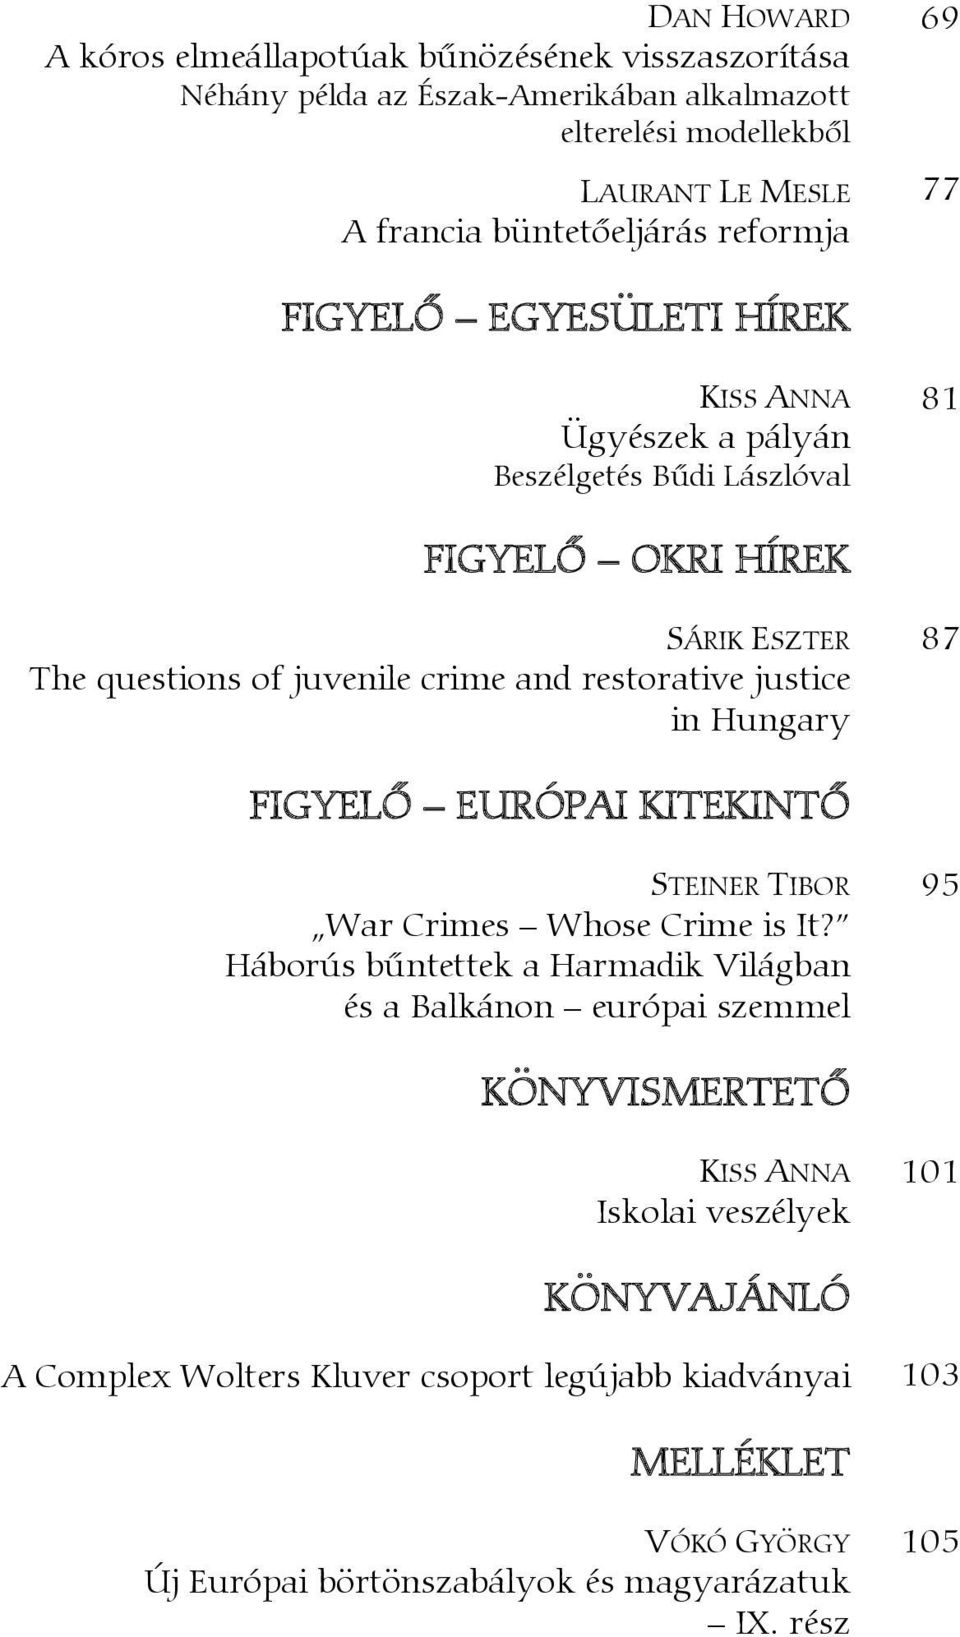 restorative justice in Hungary FIGYELŐ EURÓPAI KITEKINTŐ STEINER TIBOR 95 War Crimes Whose Crime is It?